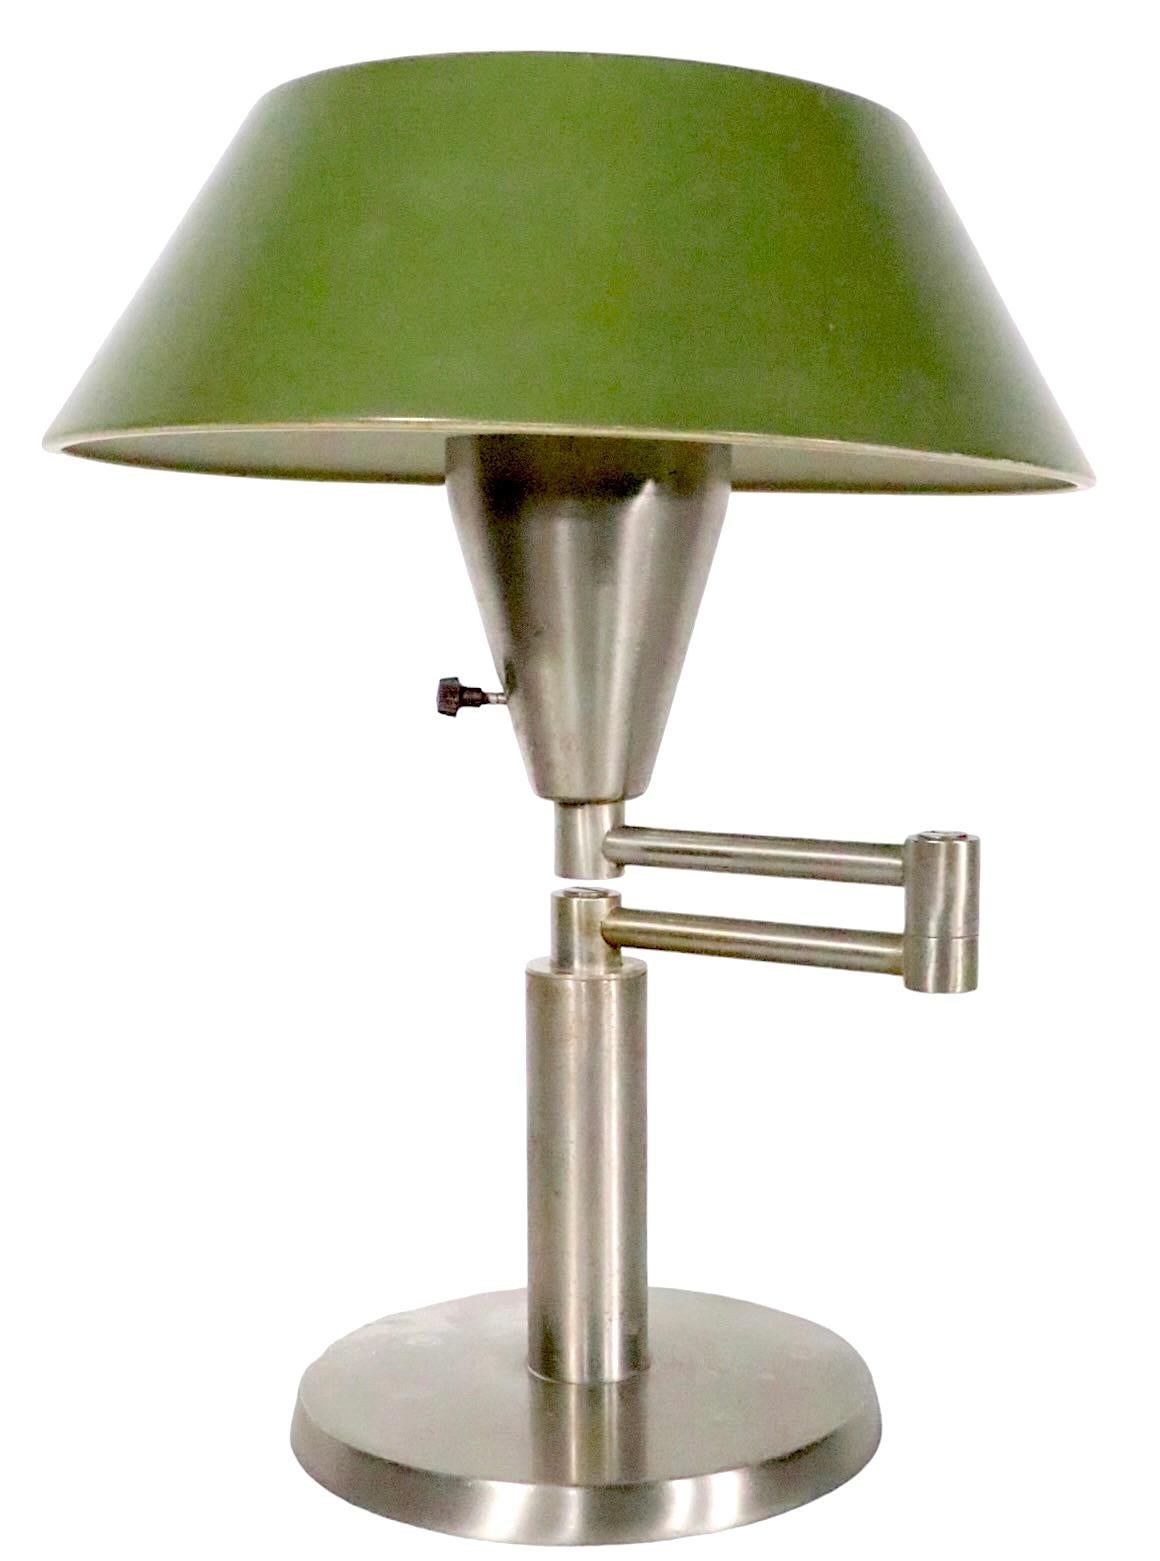 20th Century Iconic Walter Von Nessen Swing Arm Desk Lamp with Original Metal Shade For Sale